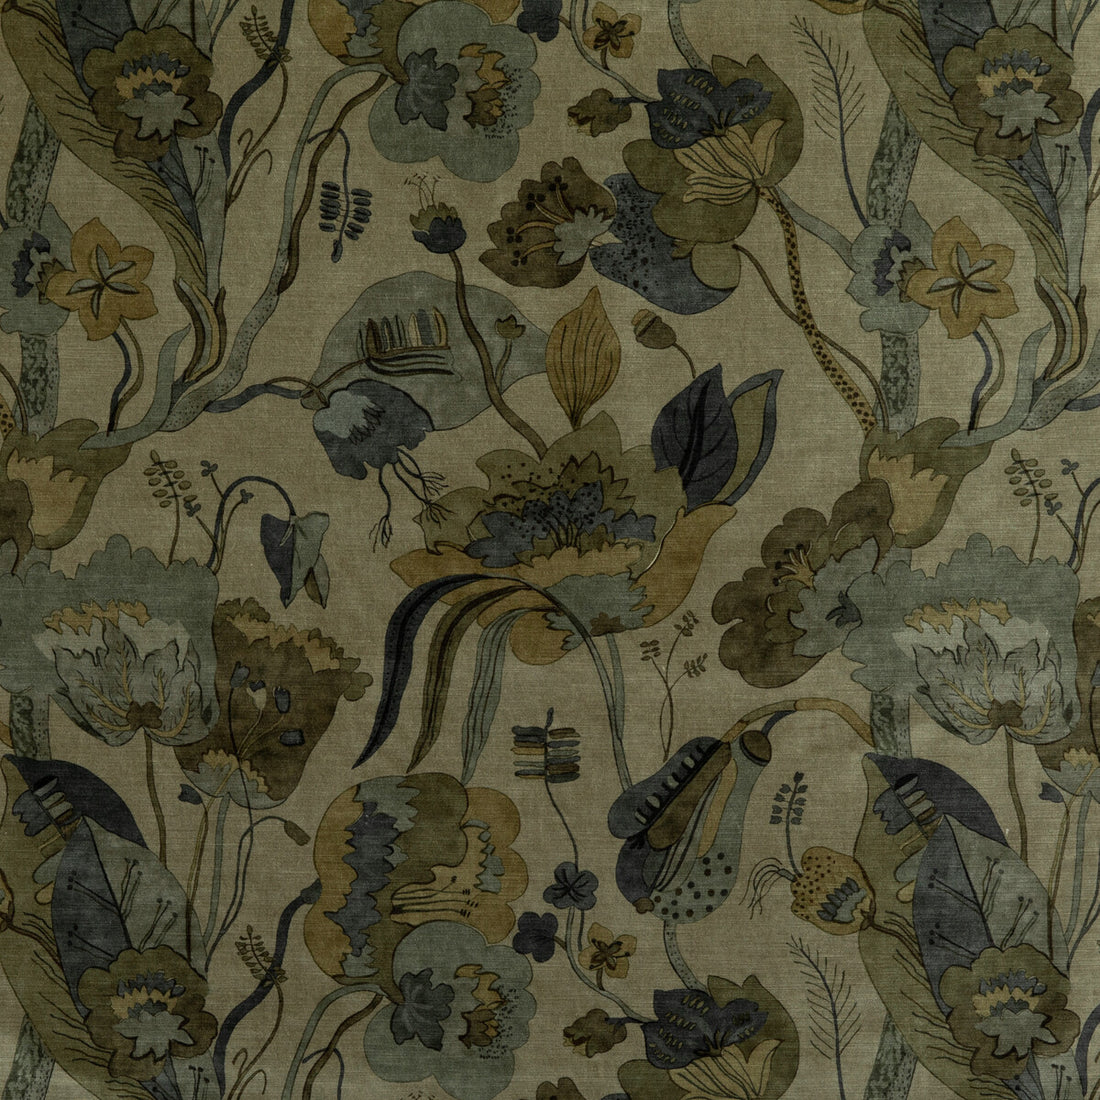 California Velvet fabric in denim/mole color - pattern BP10813.5.0 - by G P &amp; J Baker in the Signature Velvets collection